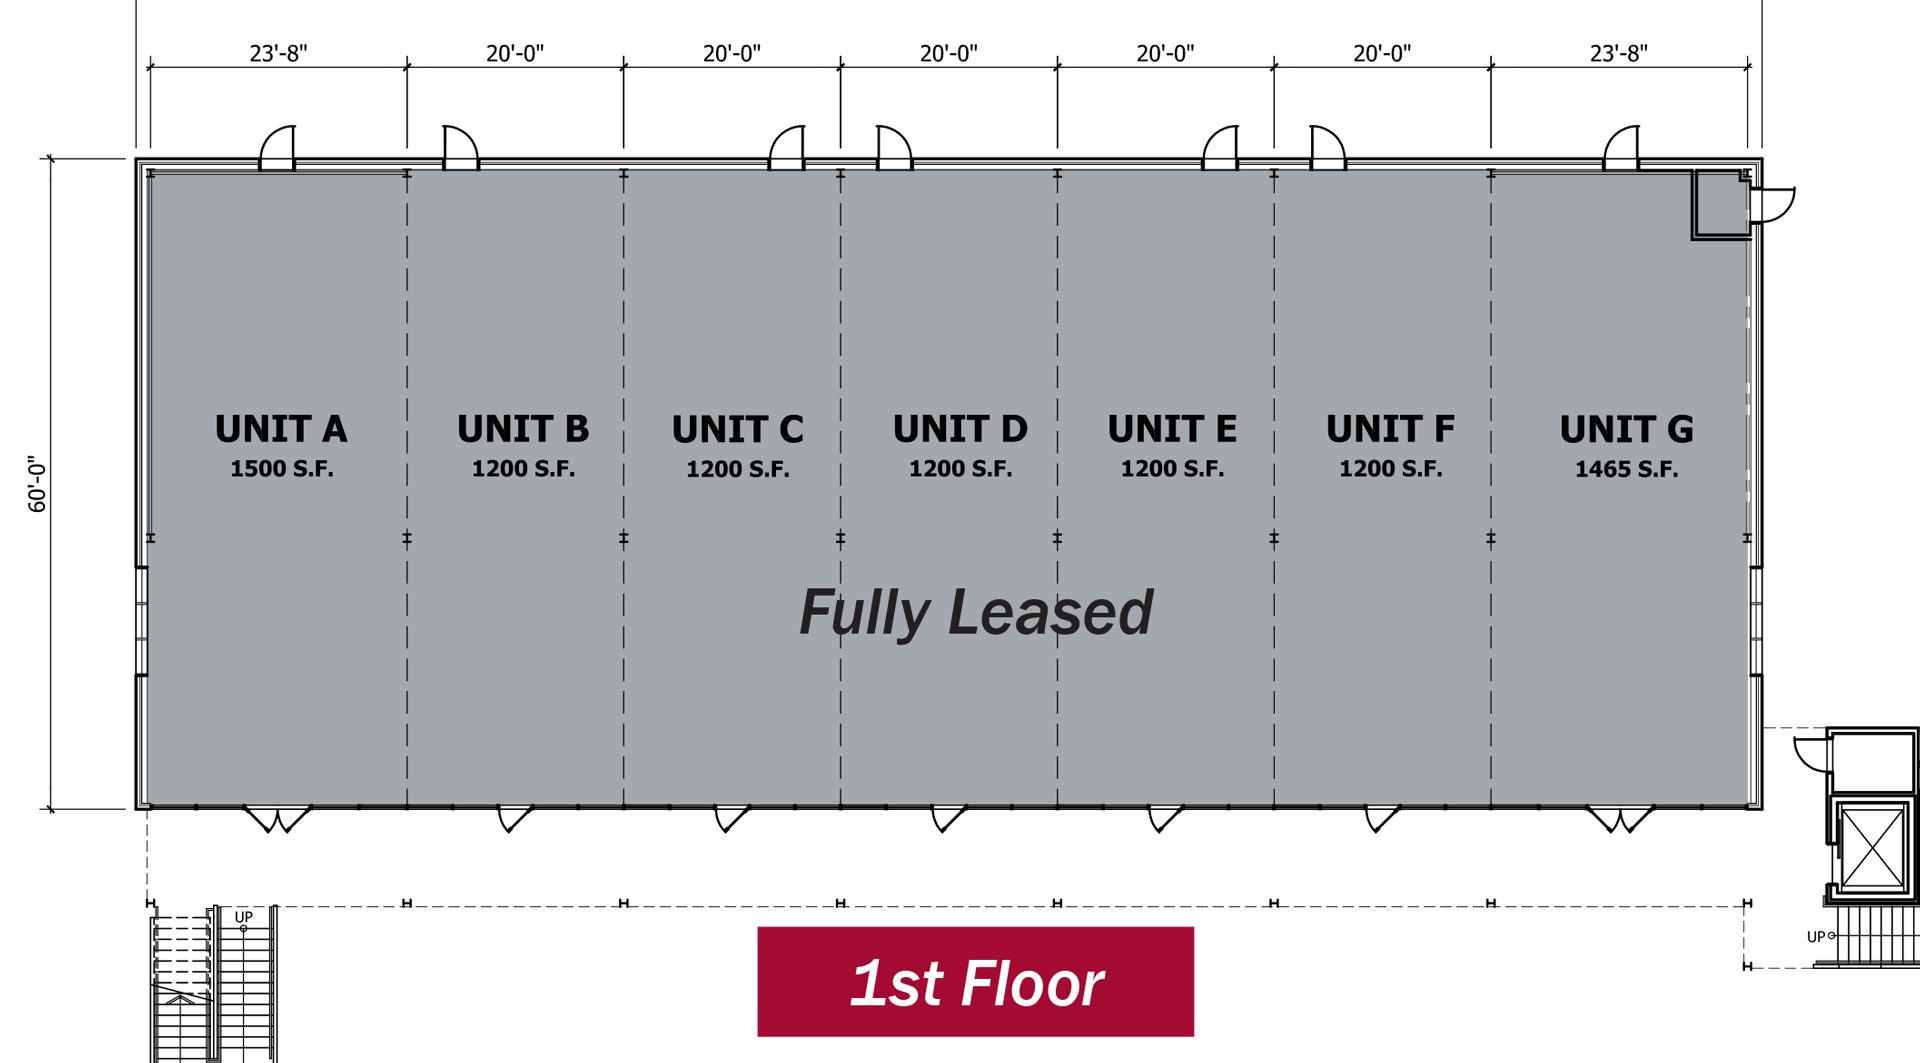 7730 Bruton Smith Blvd 1st floor site plan fully leased